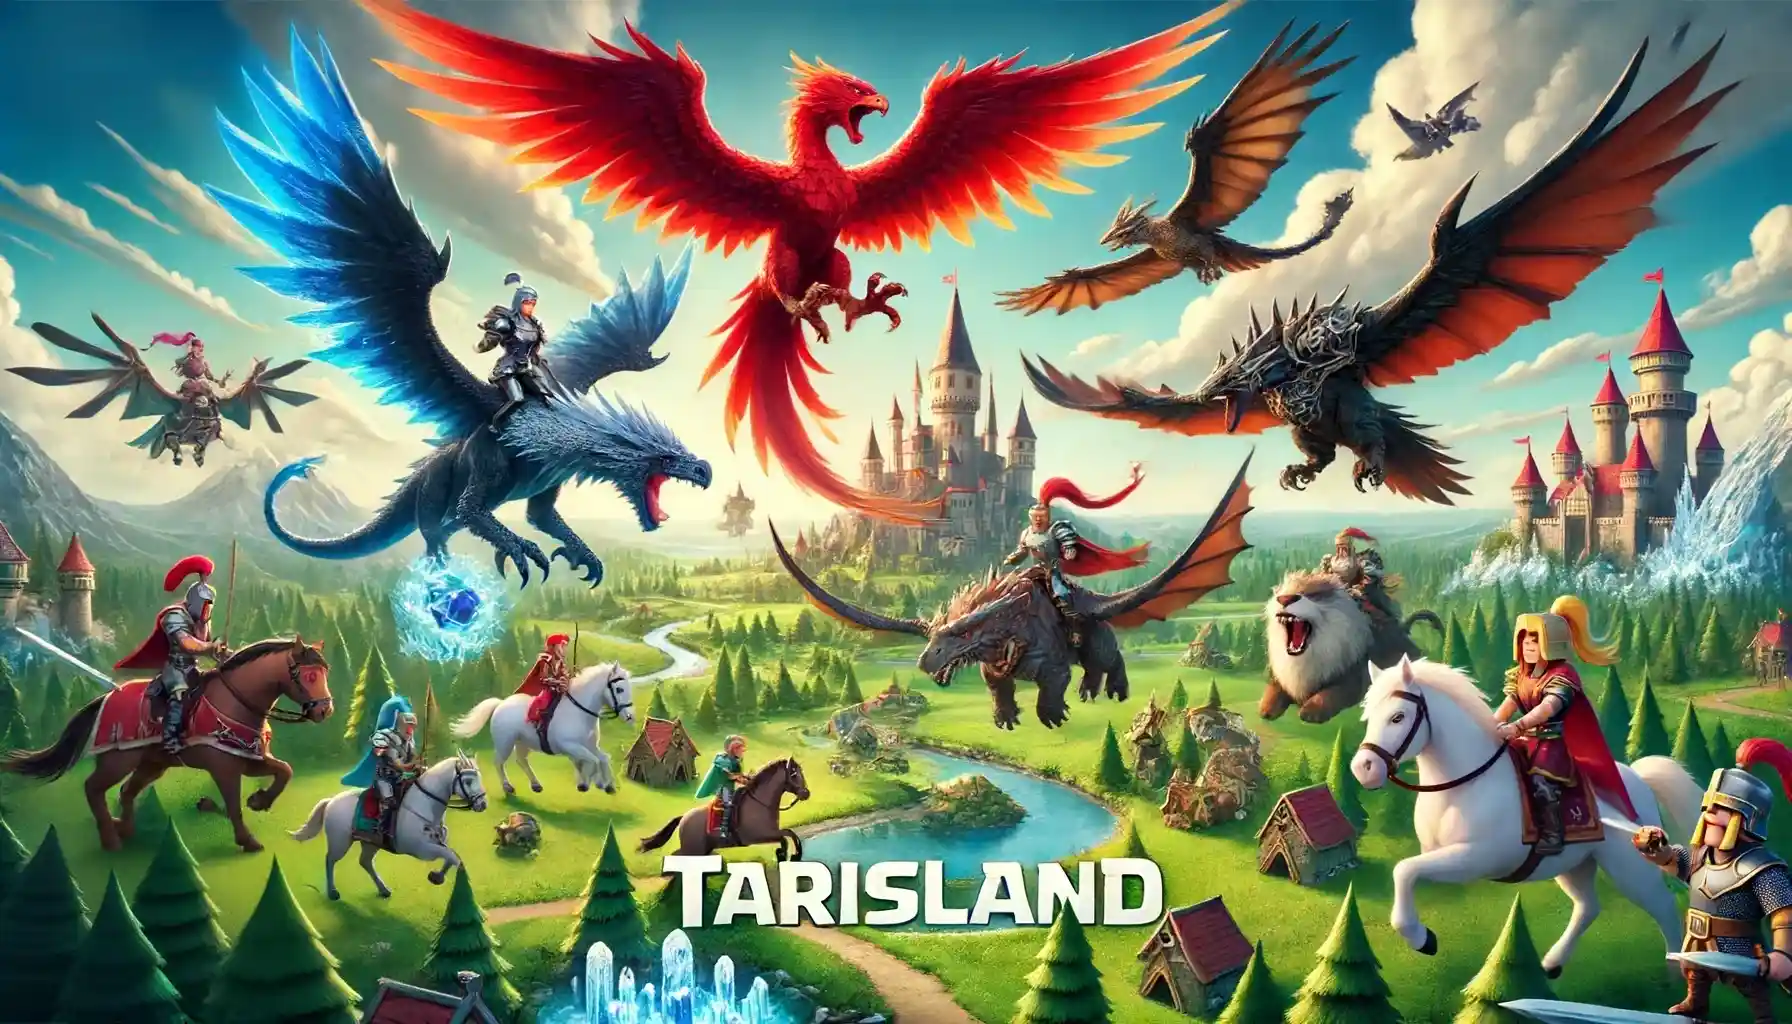 Tarisland blue feathered phoenix mystery quest